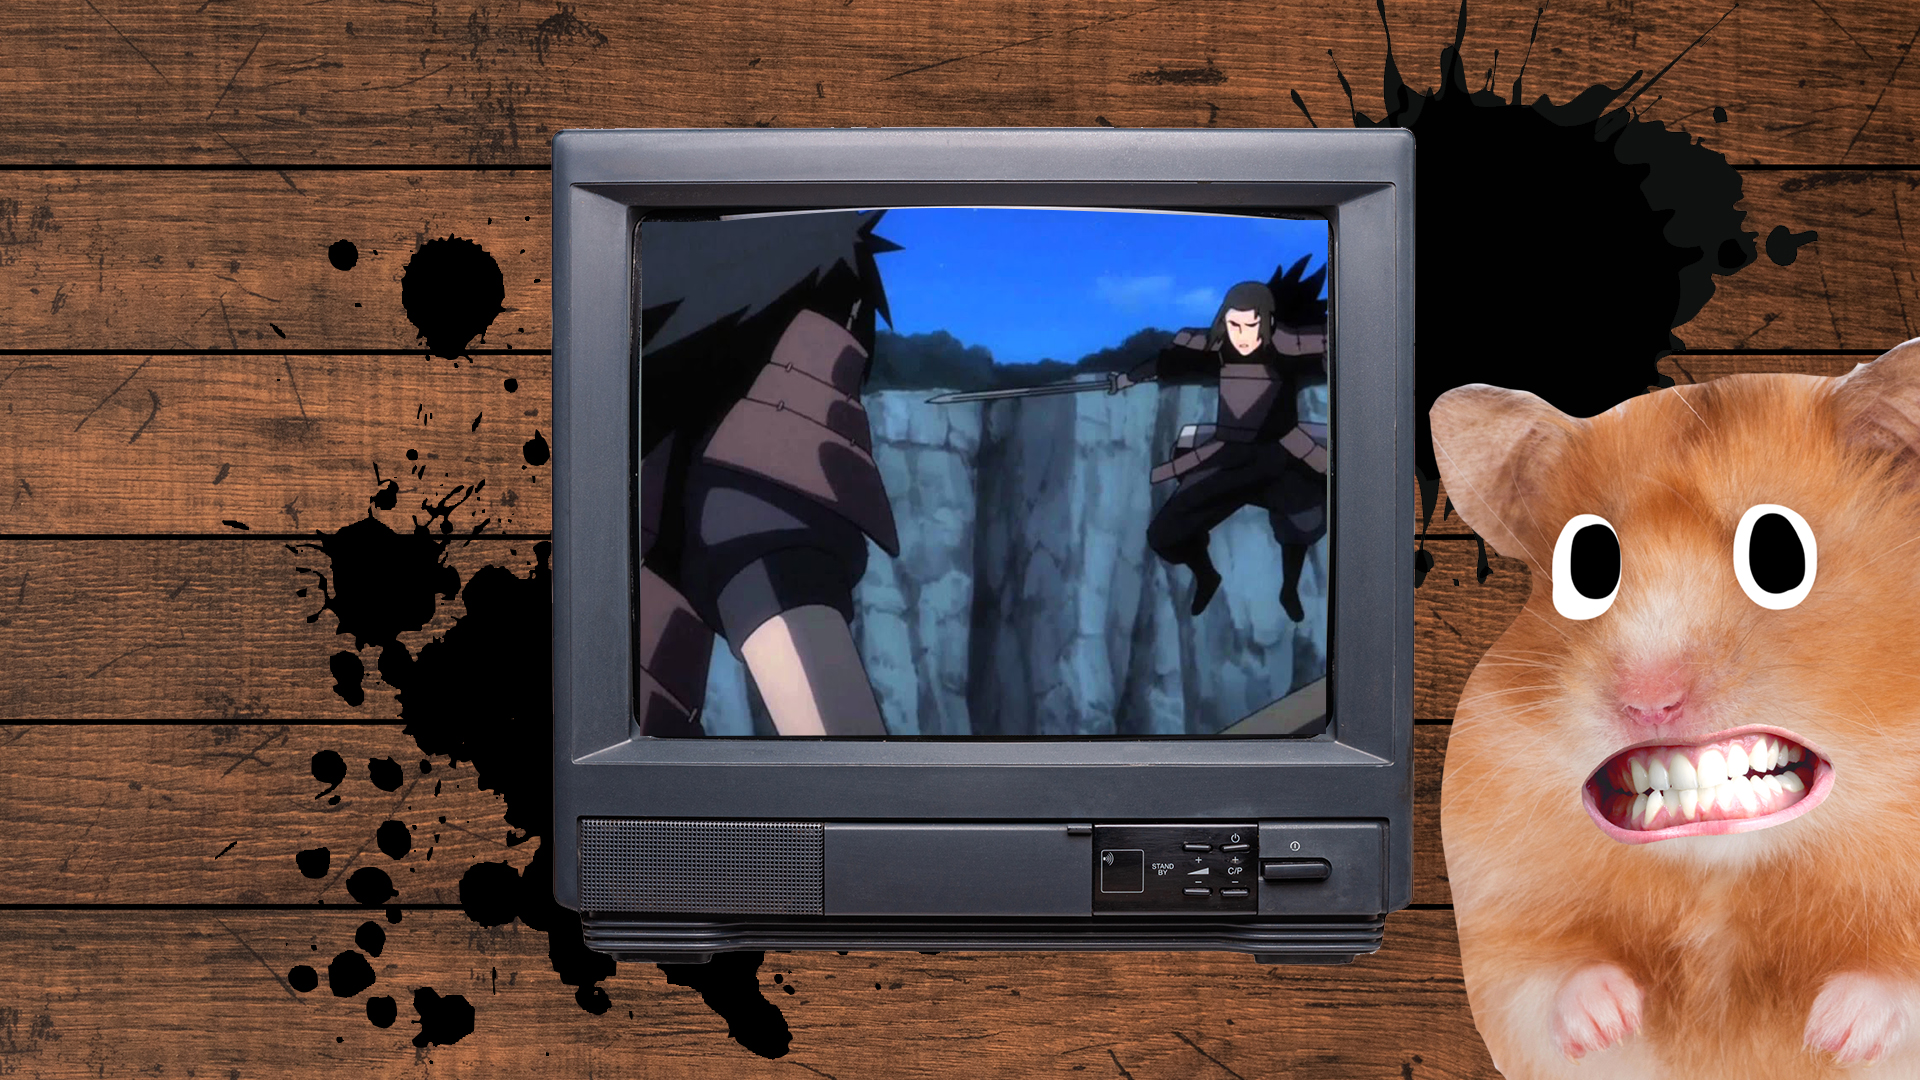 Hashirama and Madara battle on an old TV set